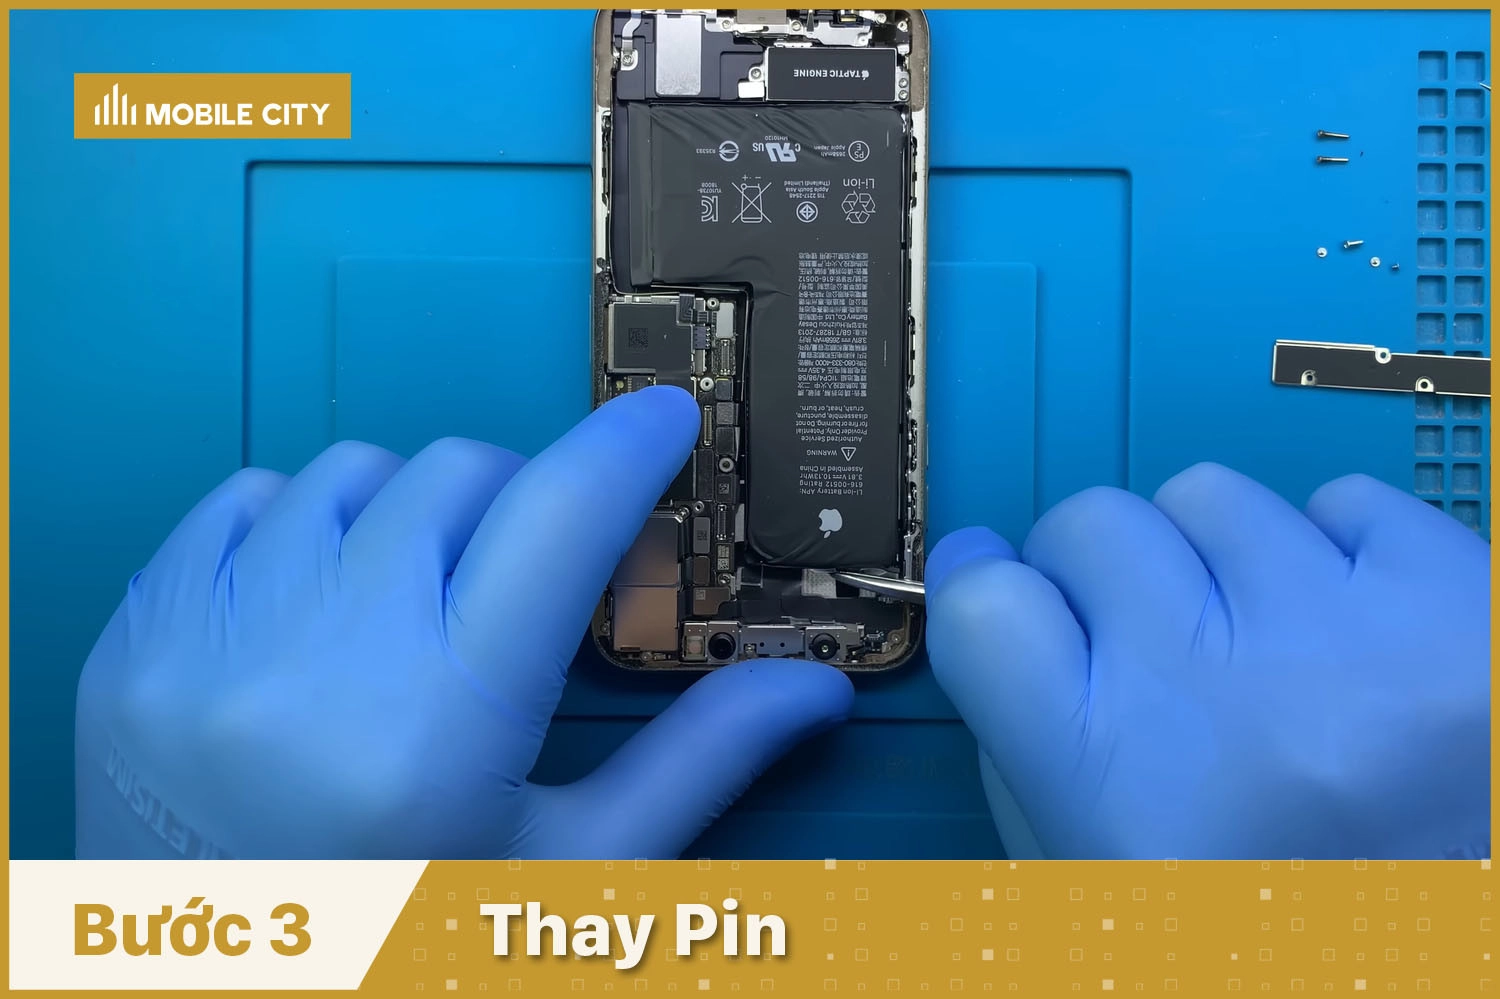 Thay Pin cho iPhone Xs